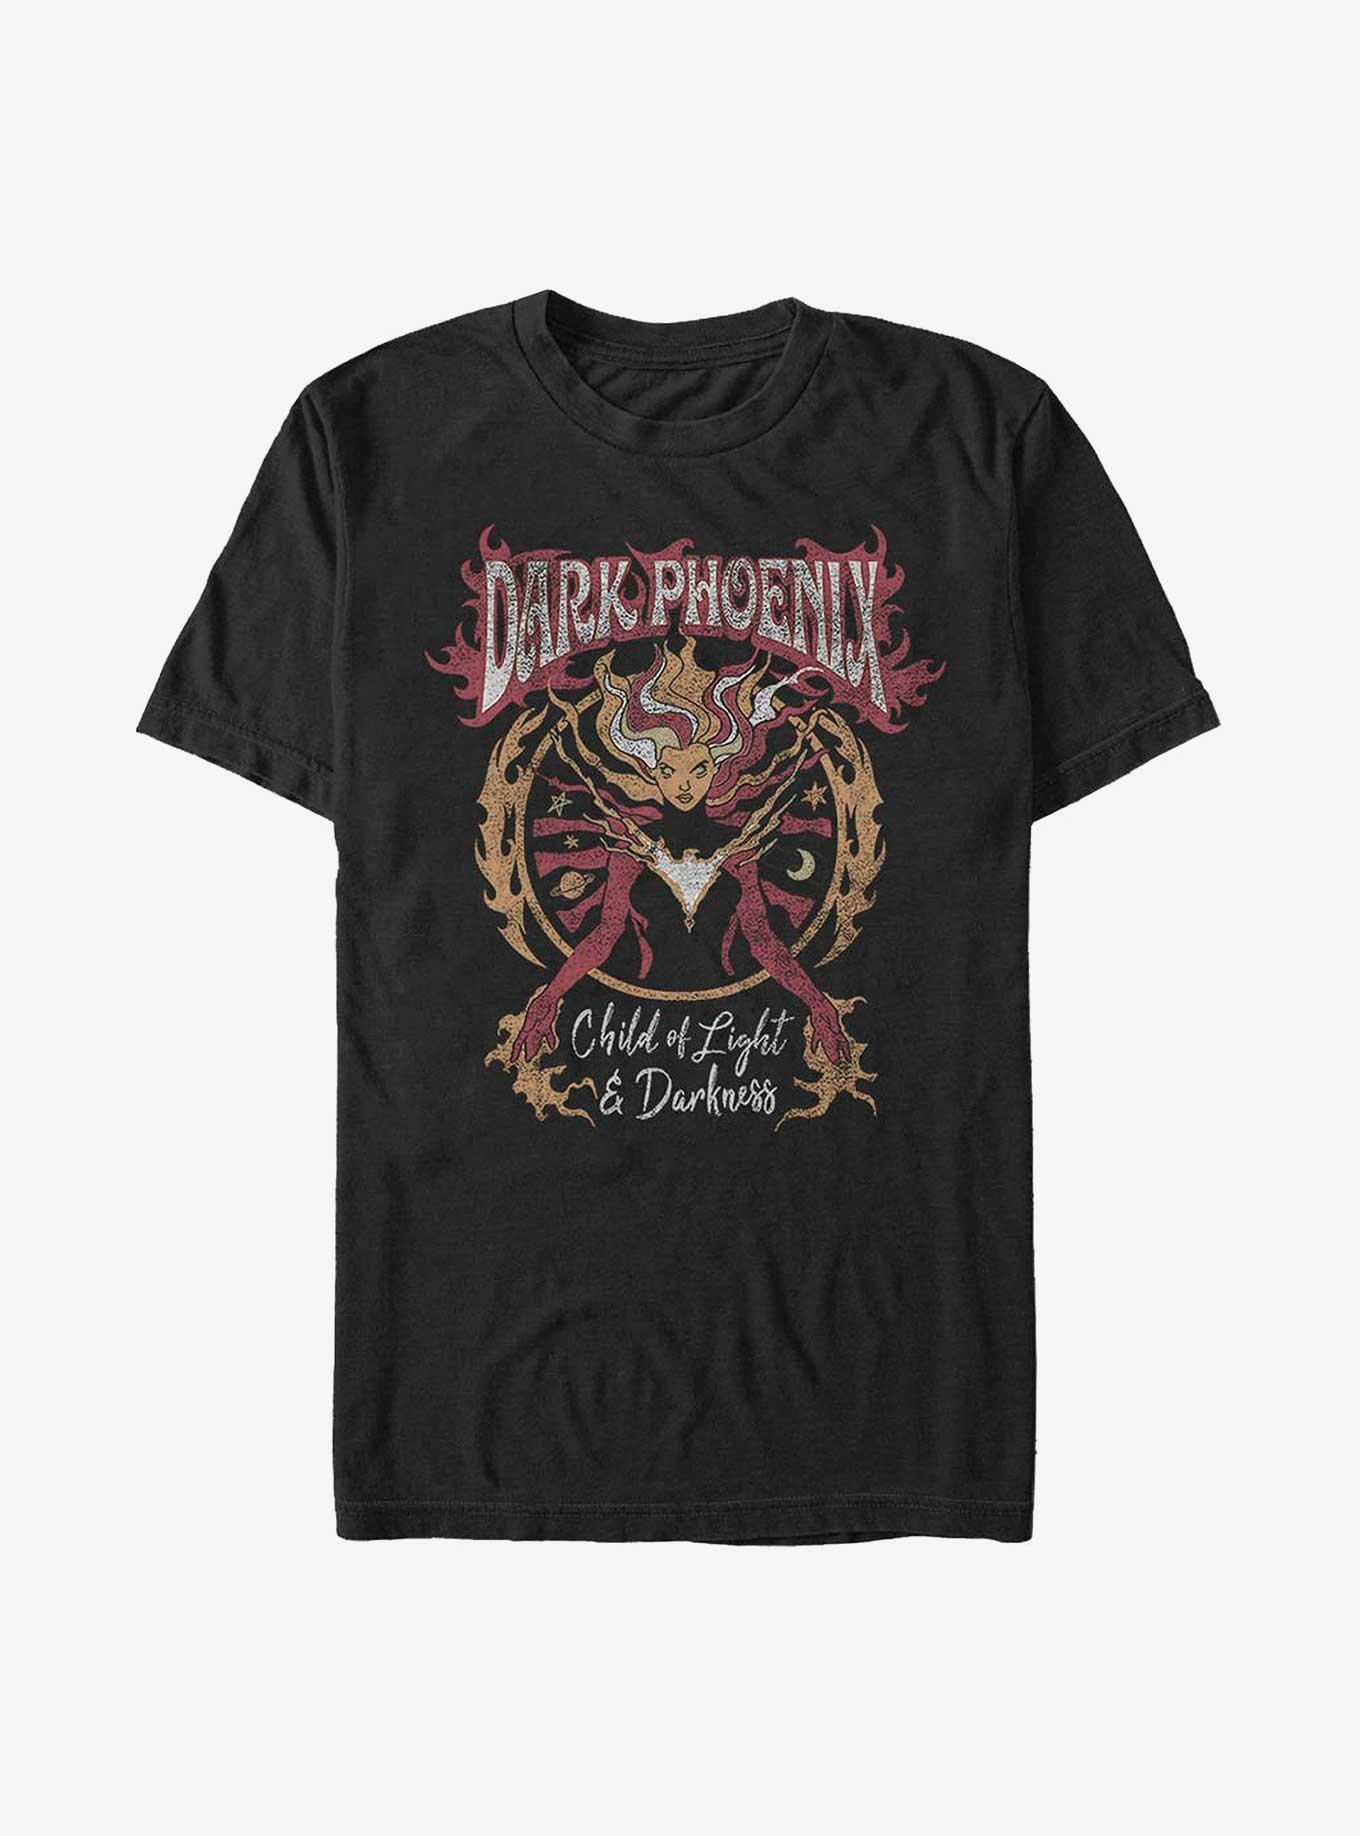 Marvel X-Men Dark Phoenix Rising T-Shirt, , hi-res